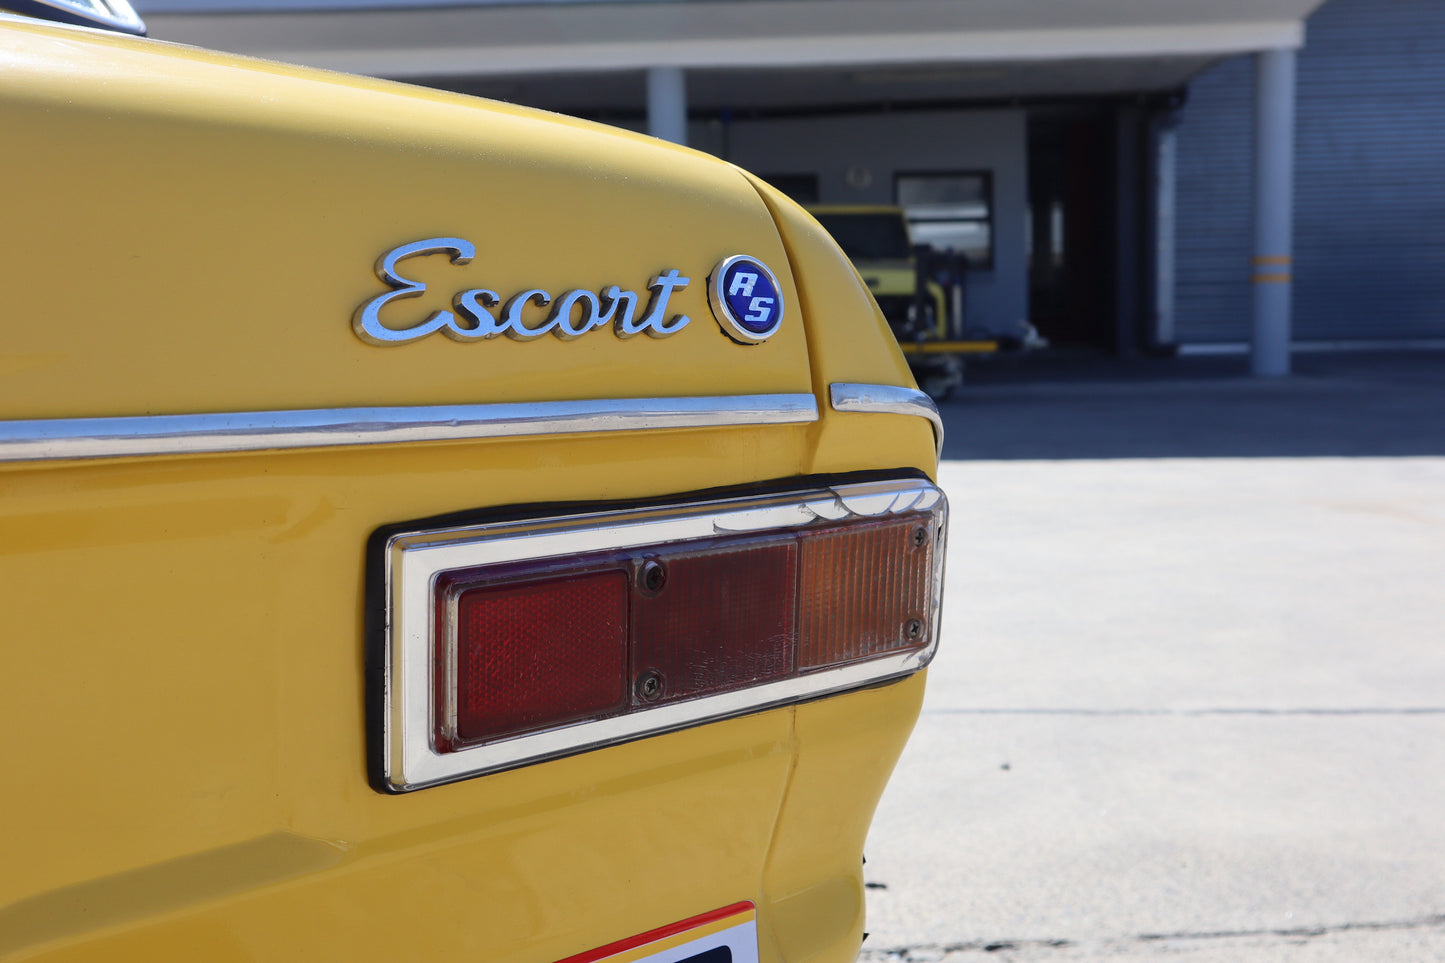 1970 FORD ESCORT RS1600 ZAKSPEED TRIBUTE RACE CAR BODY